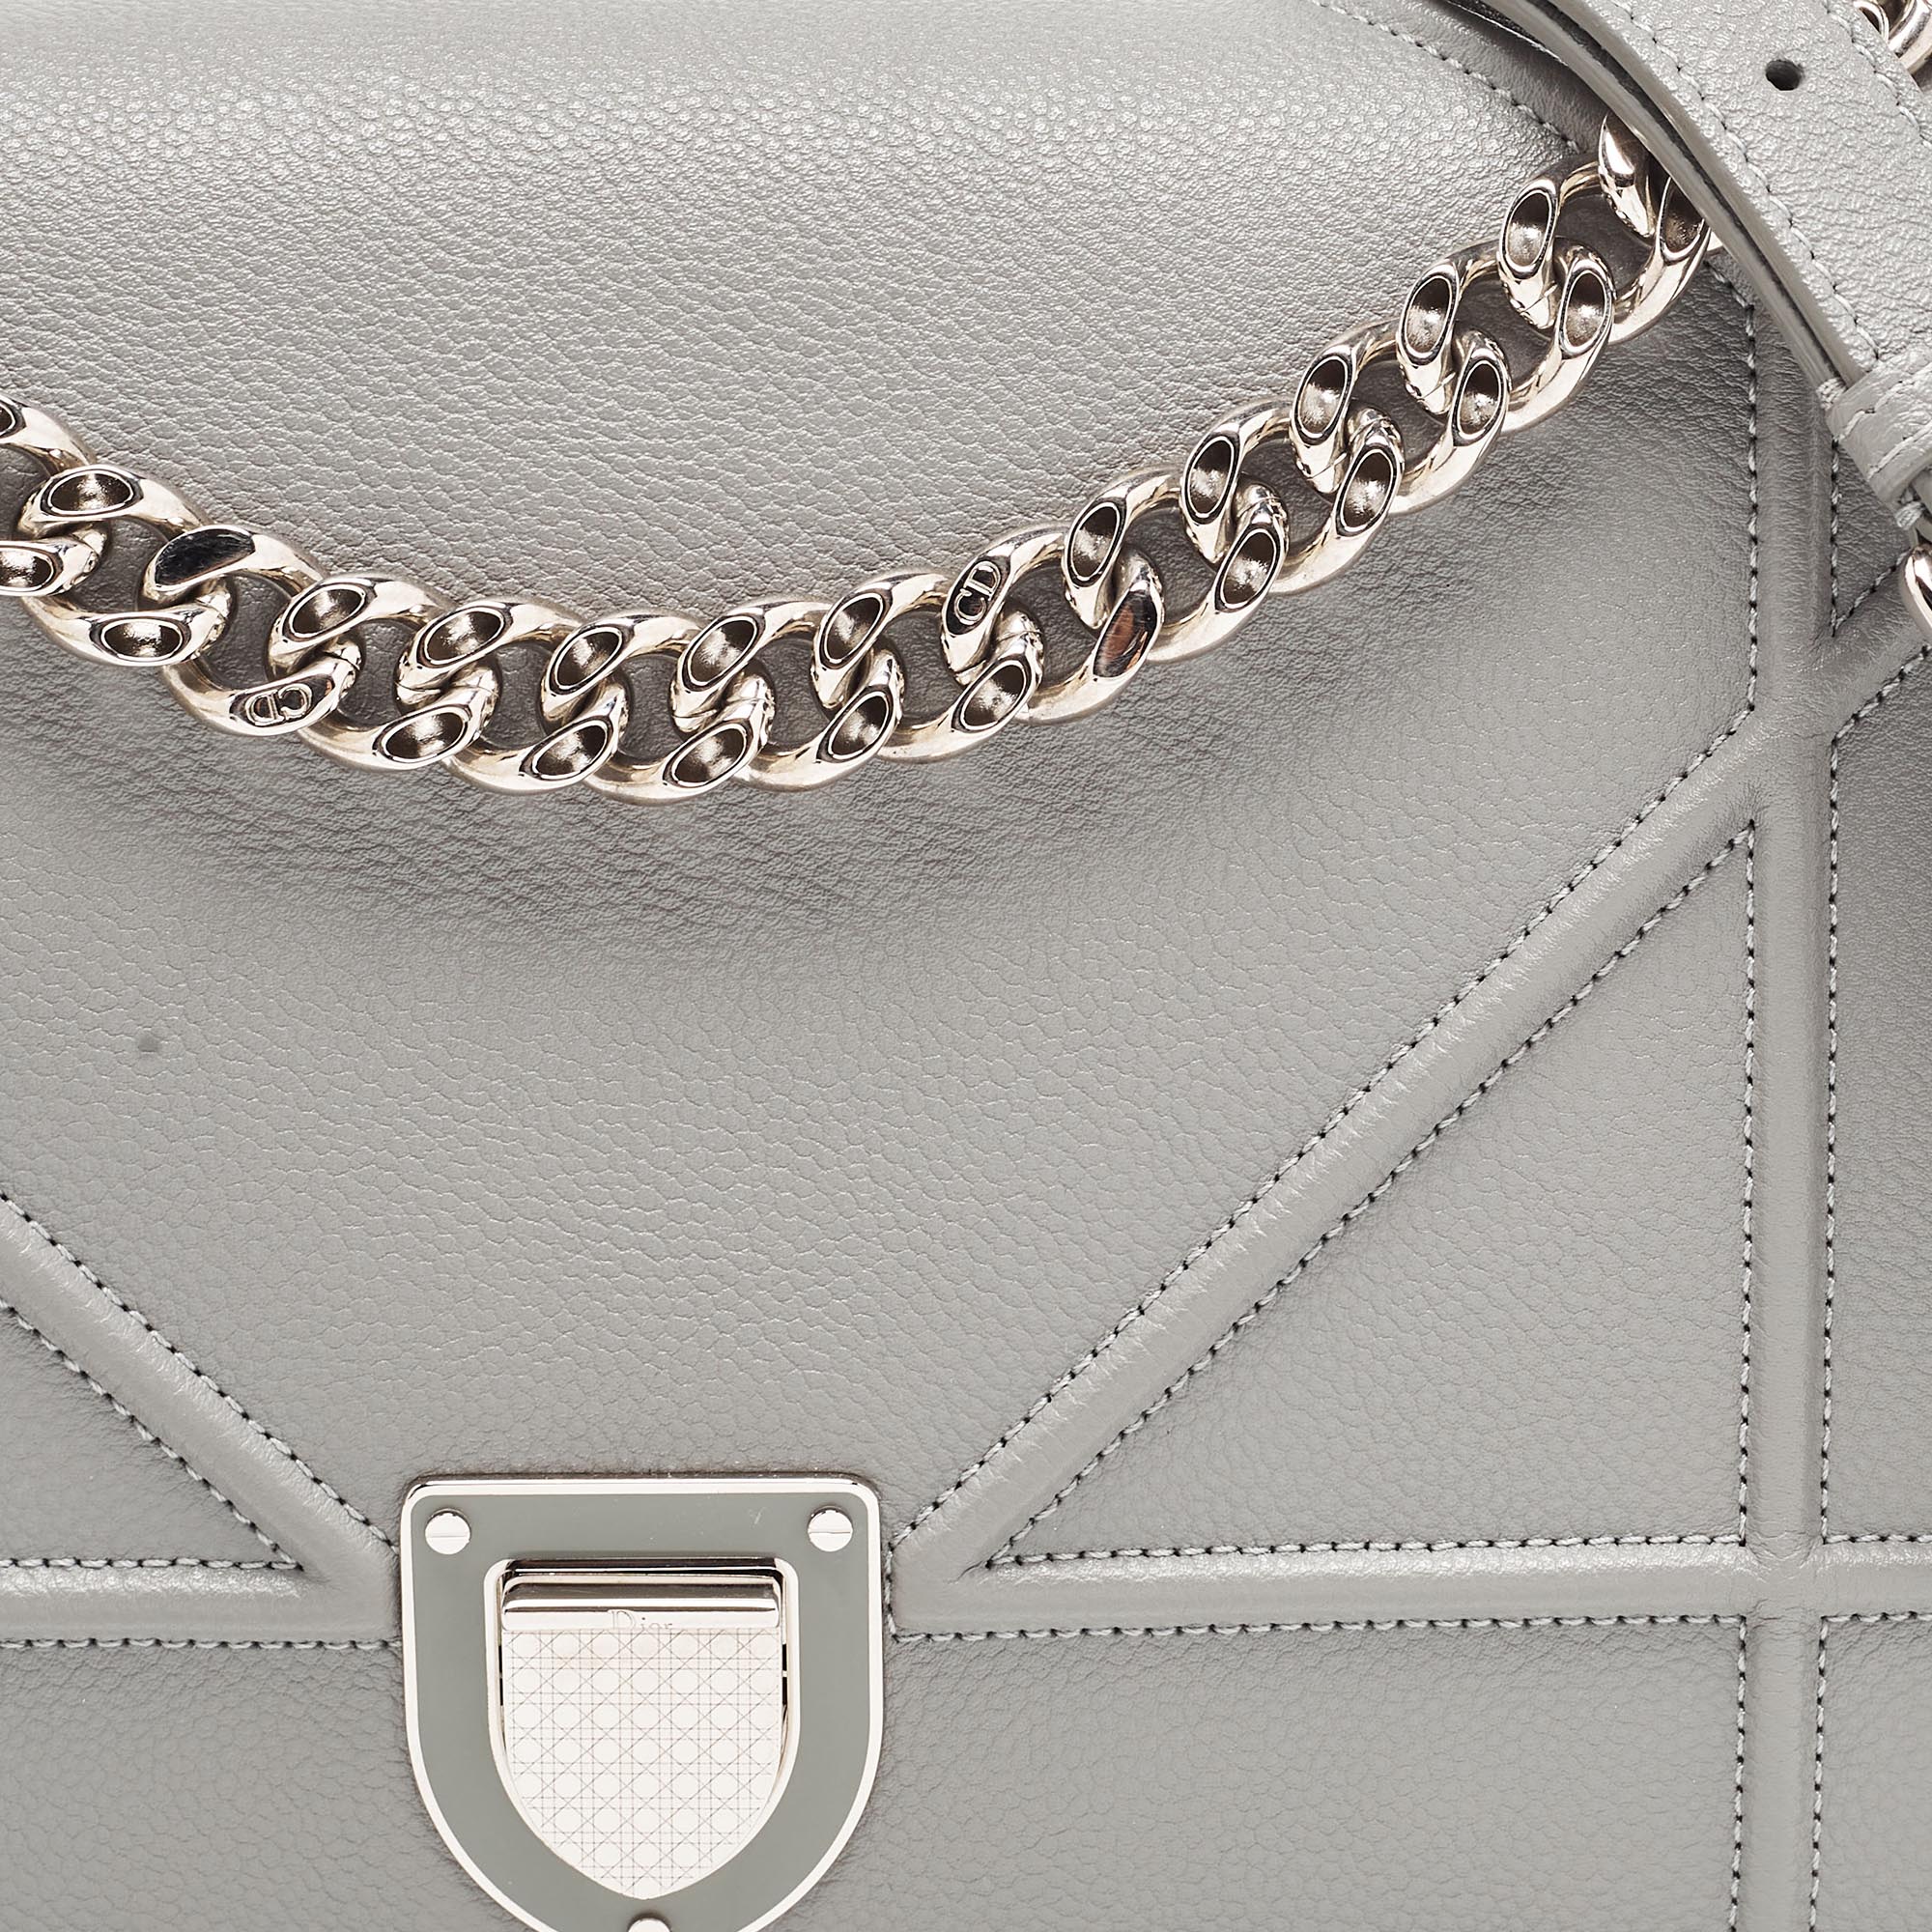 Dior Grey Leather Medium Diorama Flap Shoulder Bag